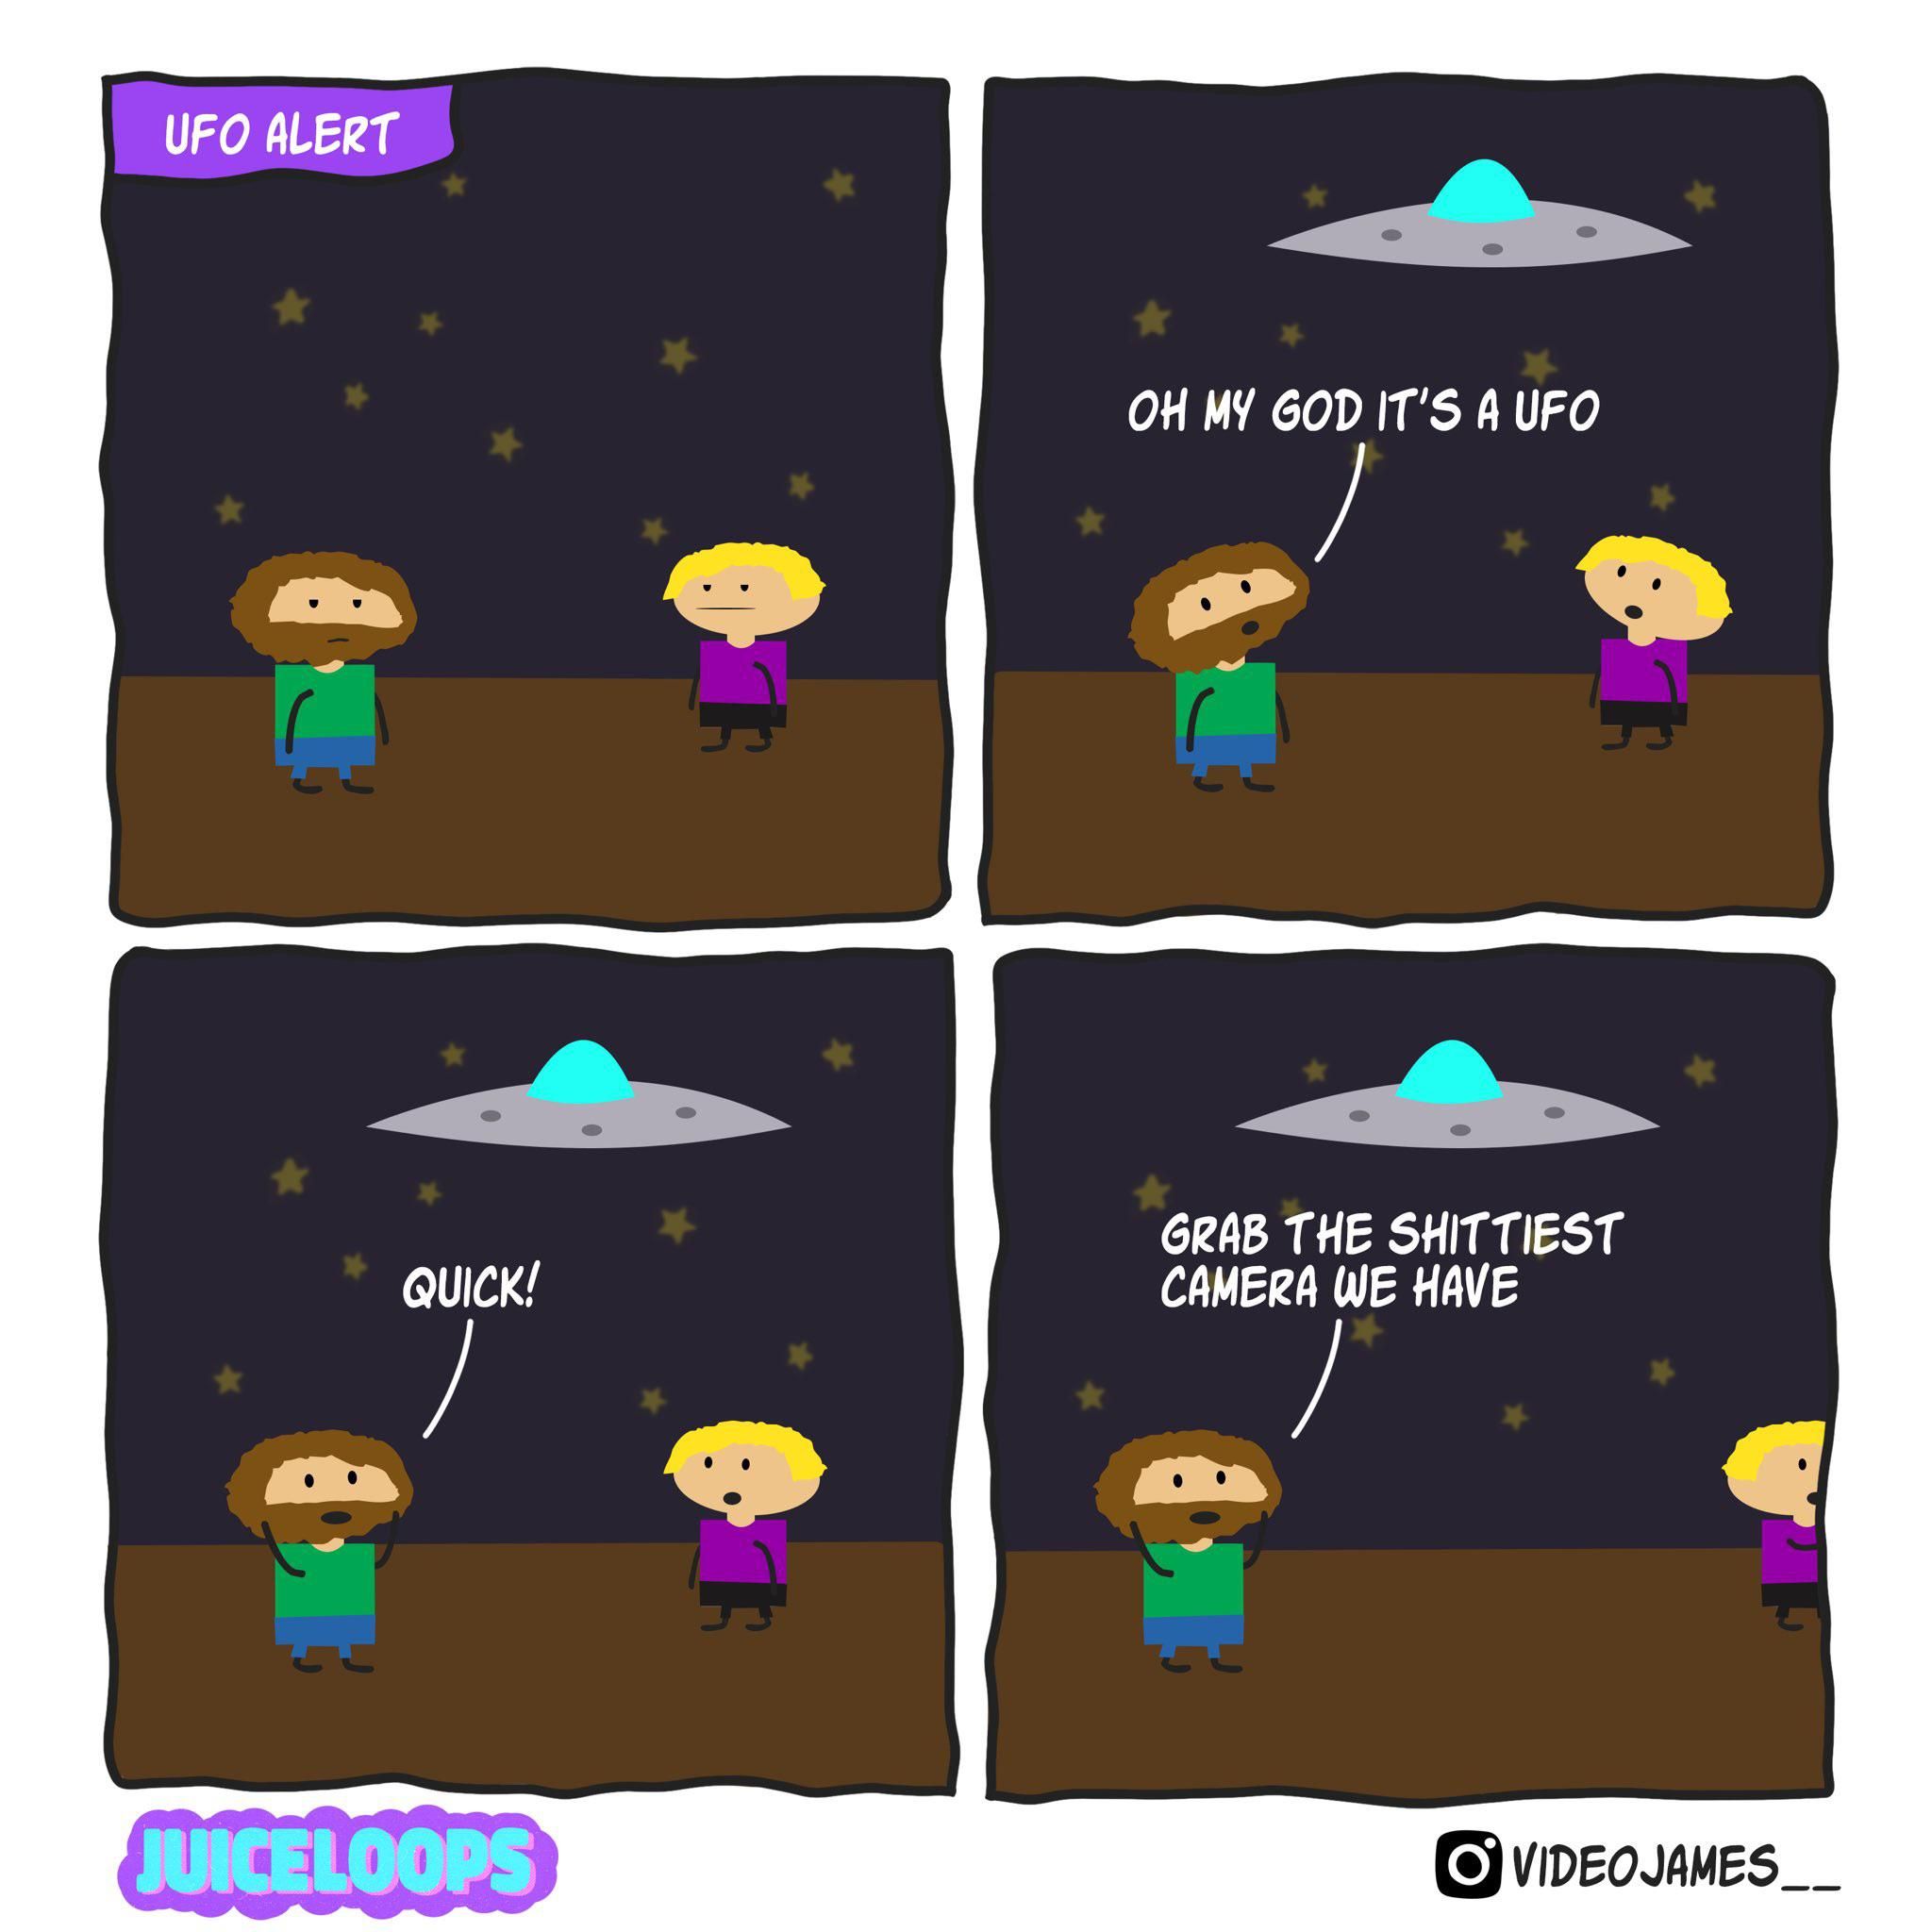 UFO sighting